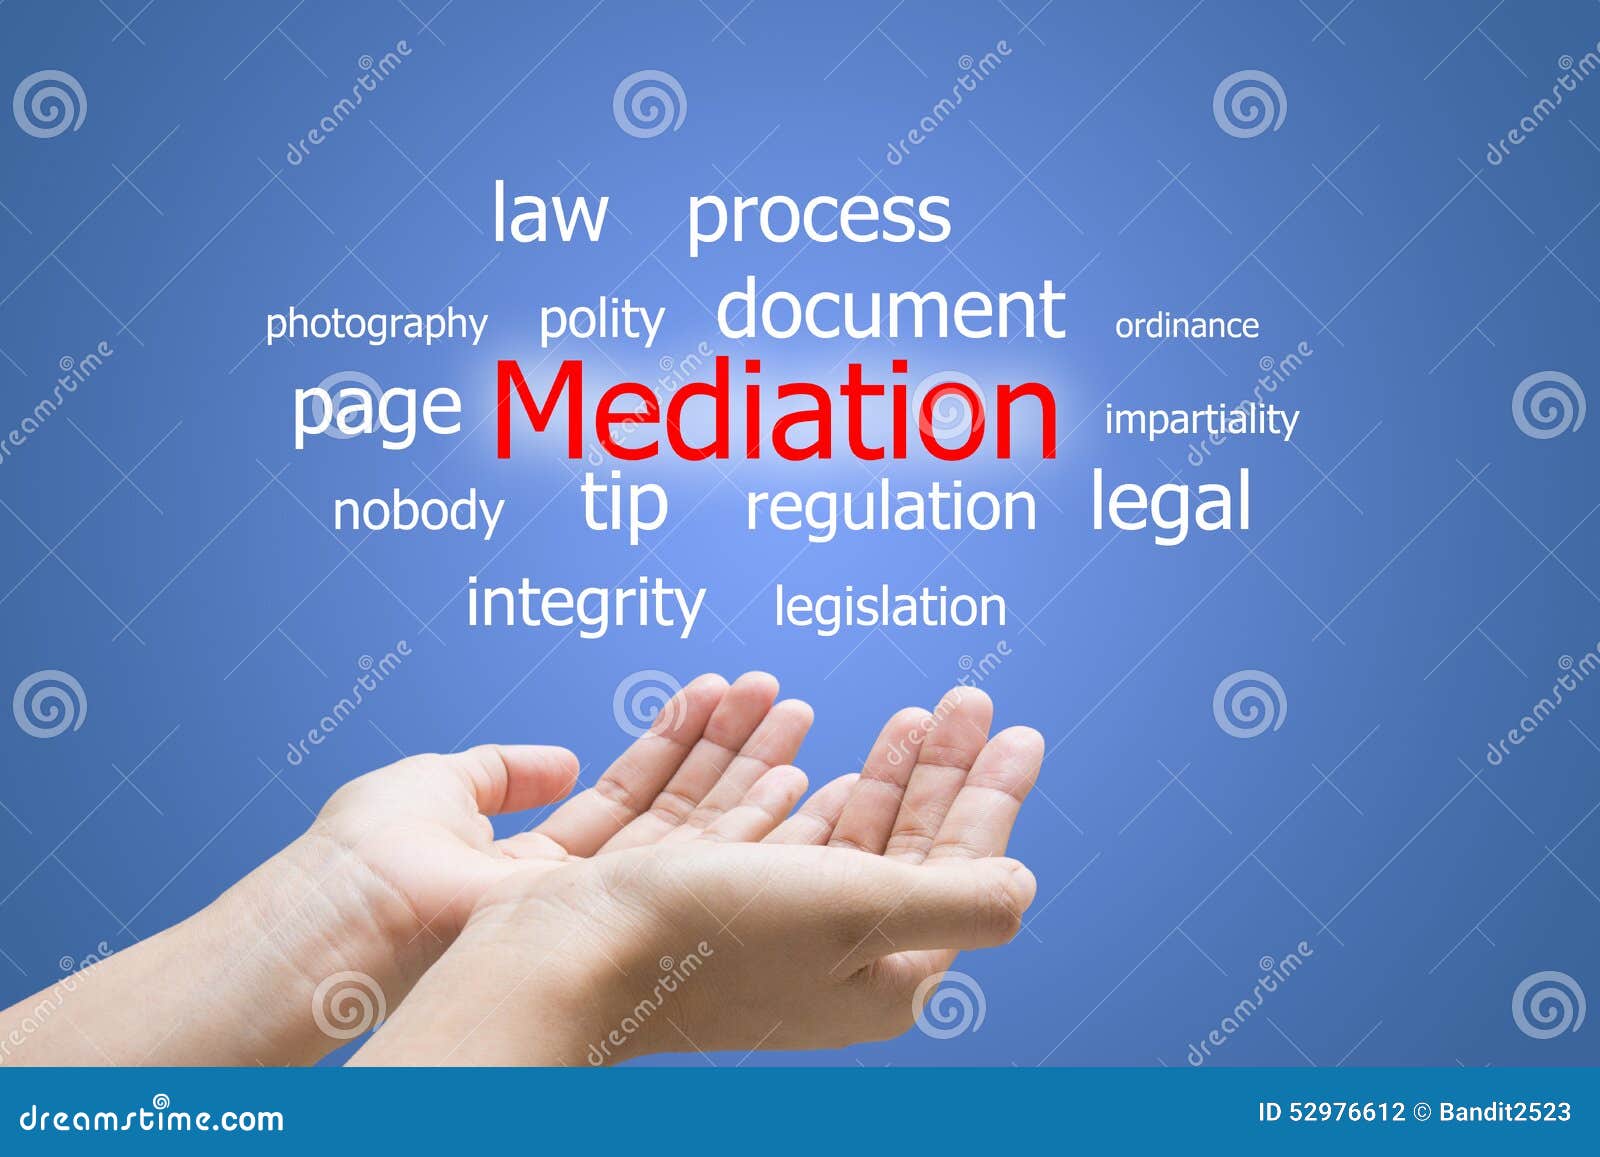 mediation word cloud